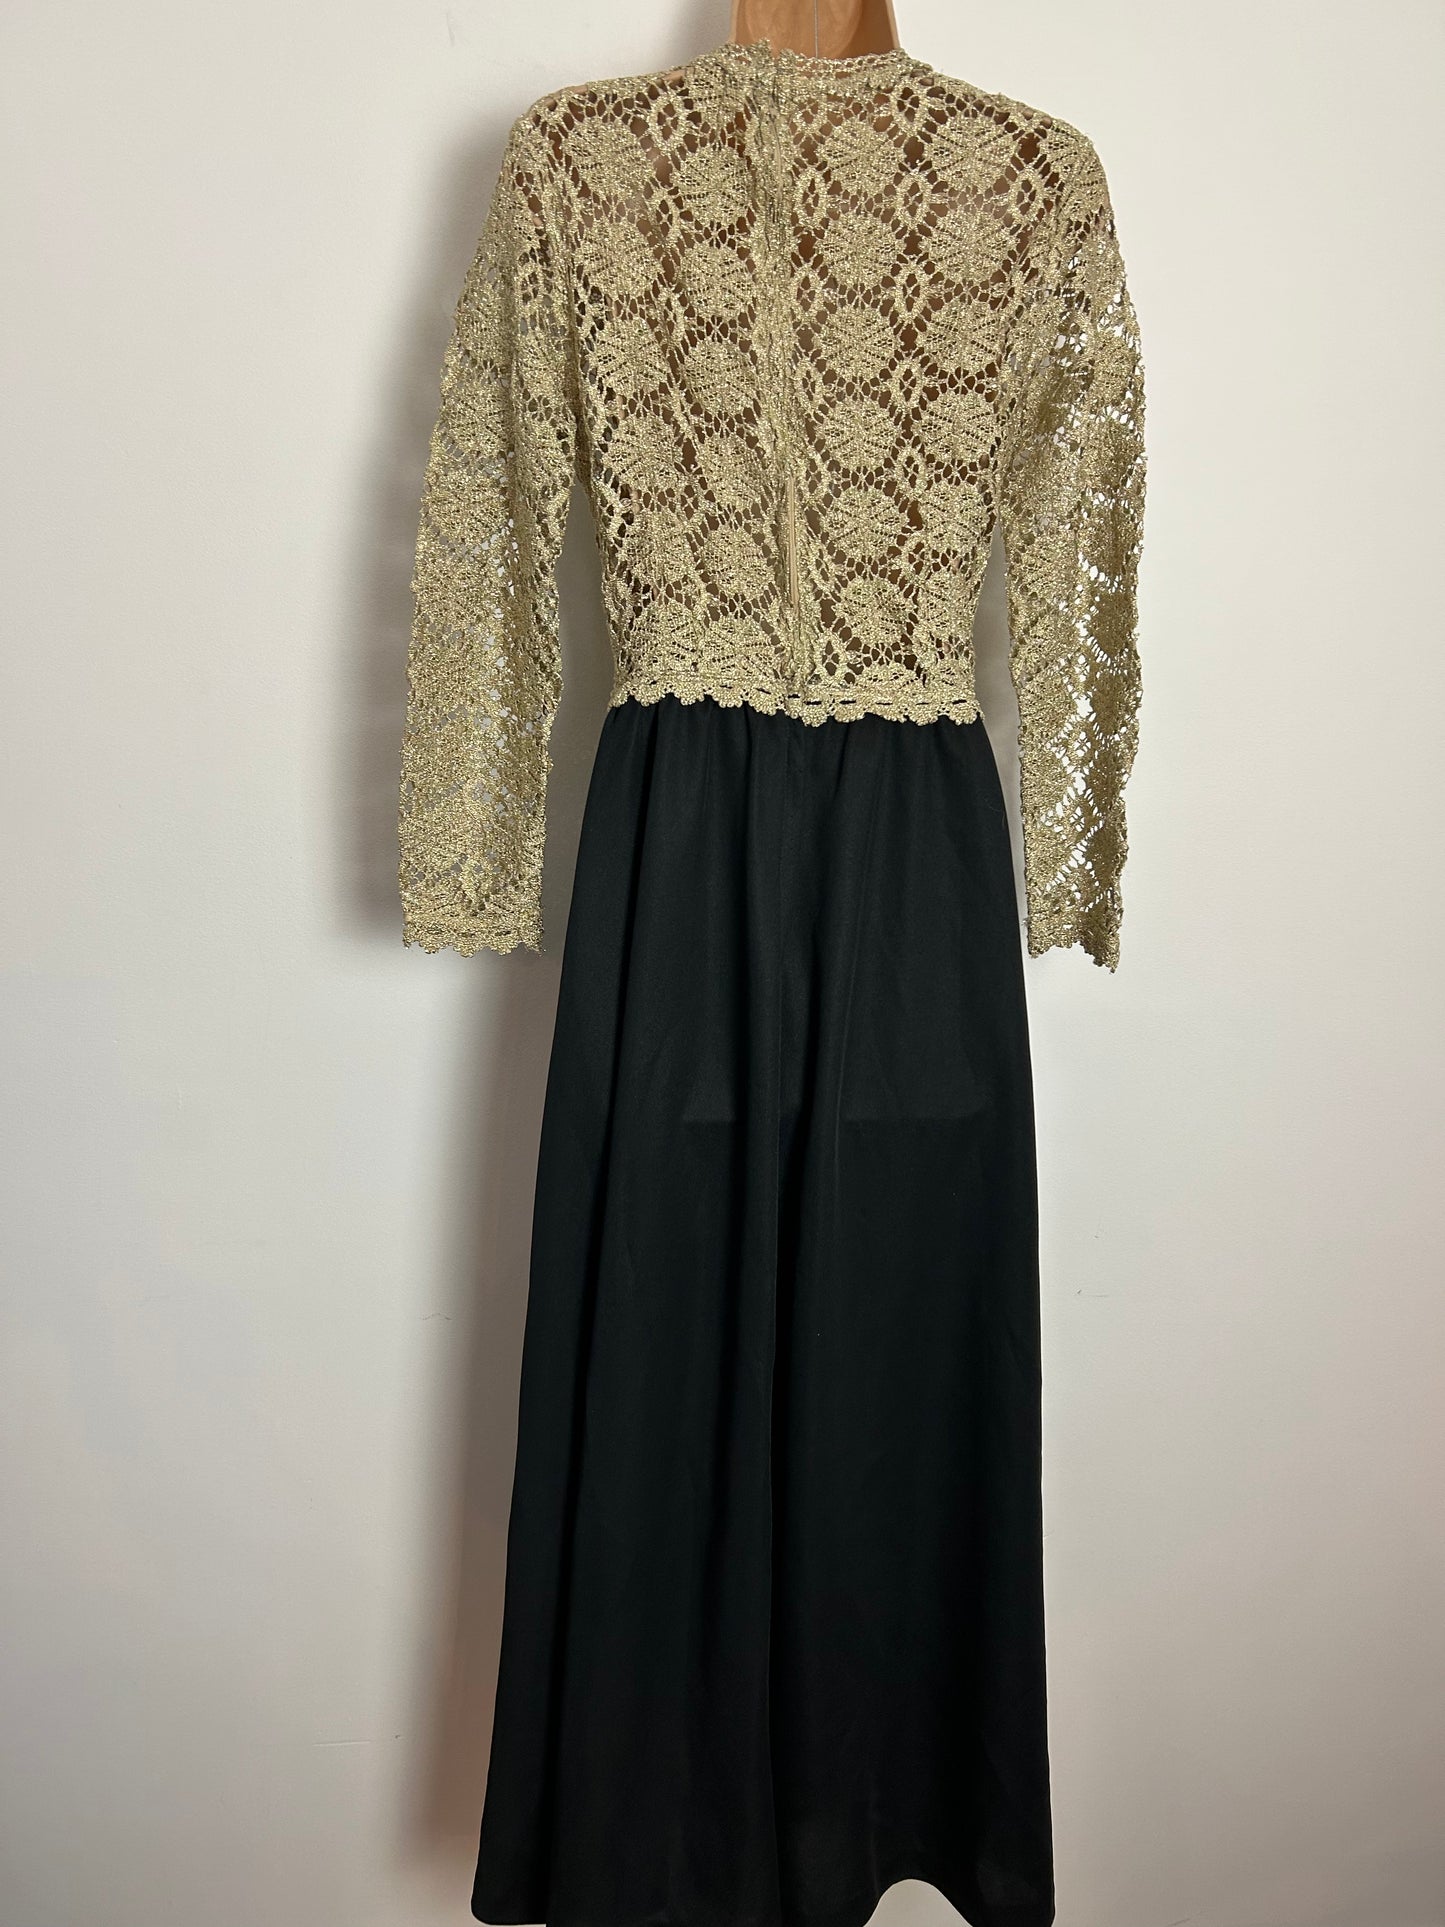 Vintage 1970s UK Size 6 Black & Metallic Gold Crochet Bodice Long Sleeve Occasion Evening Maxi Dress